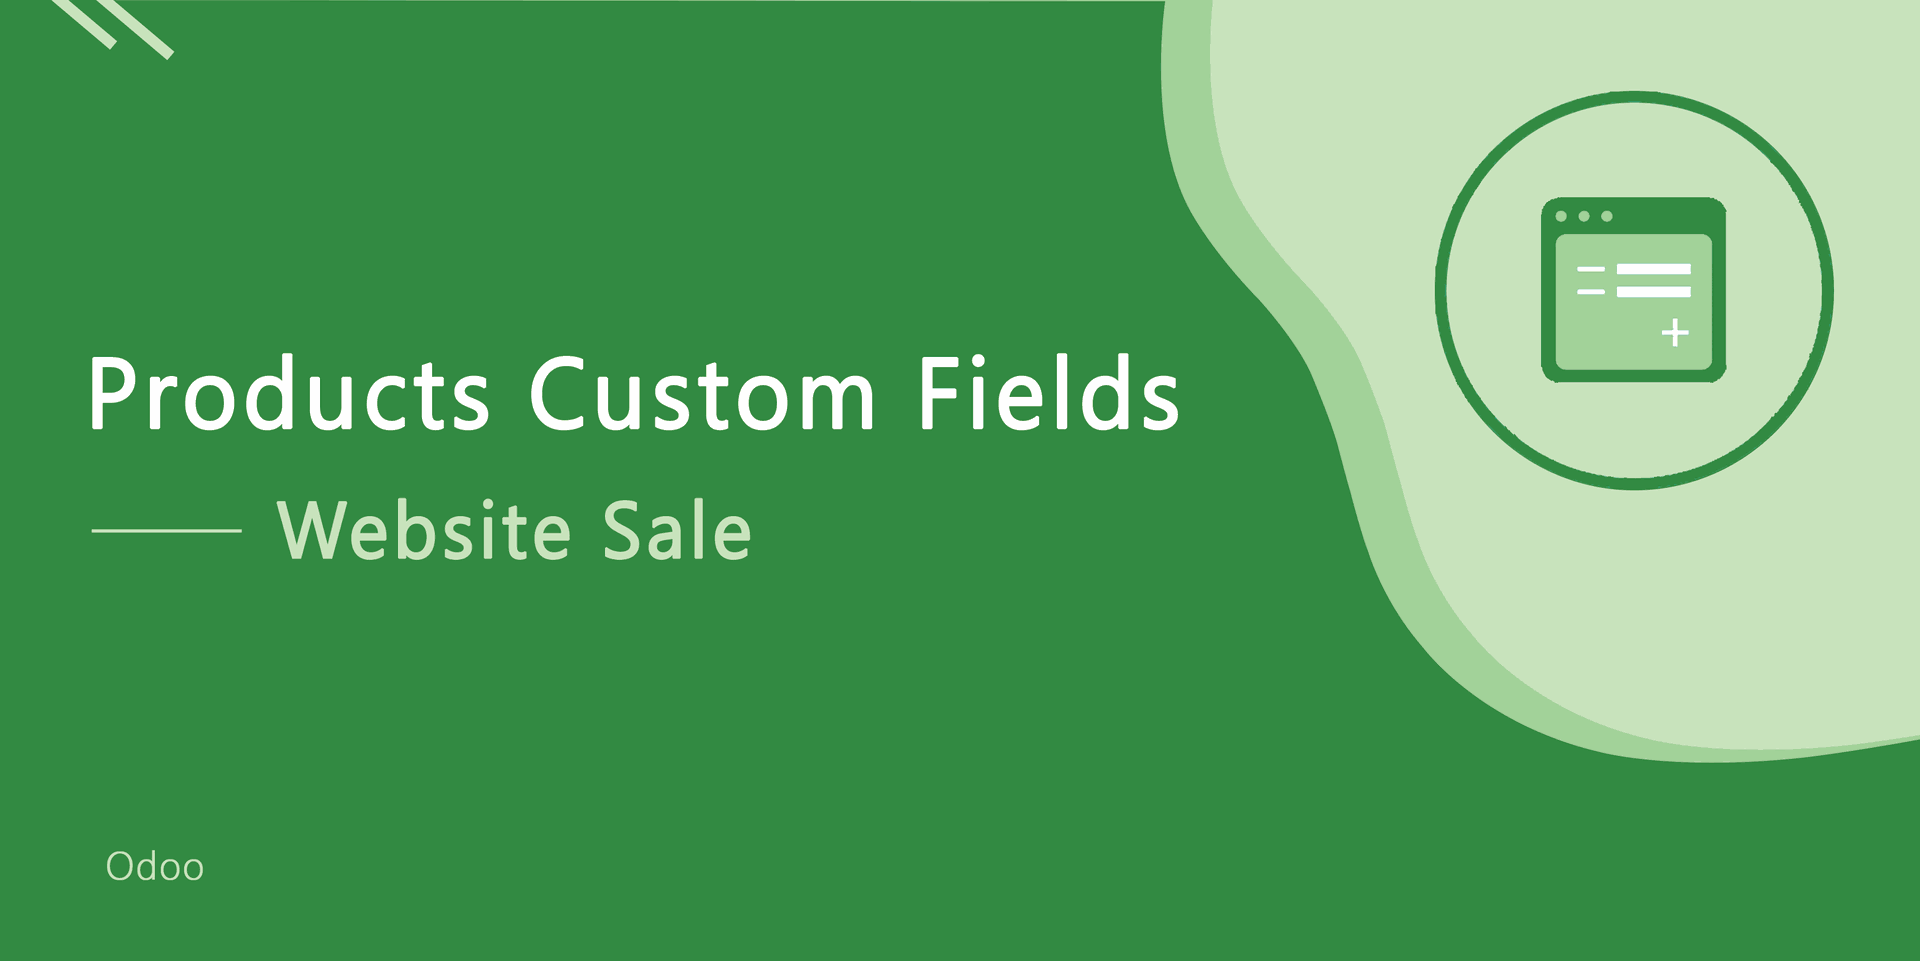 Products Custom Fields - Website Sale